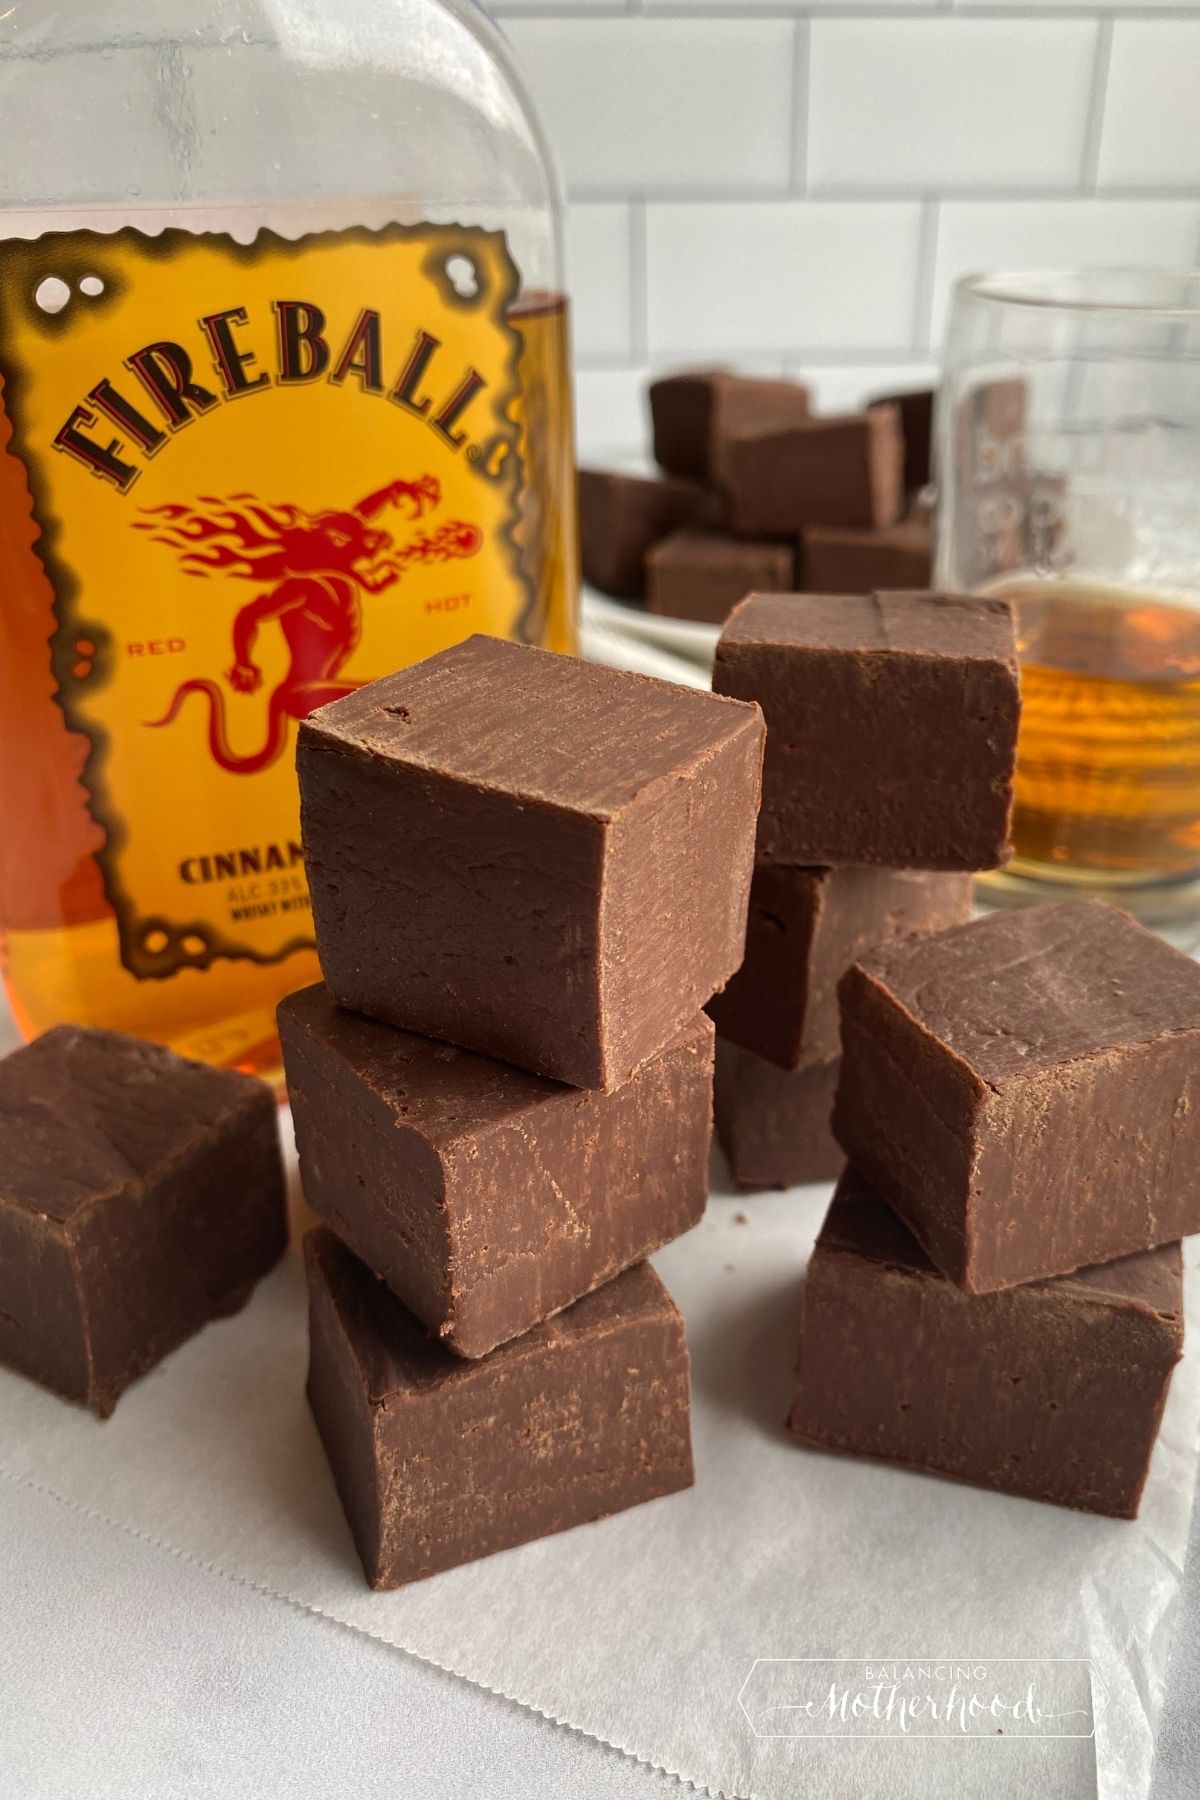 chocolate fudge stacked next to Fireball whisky